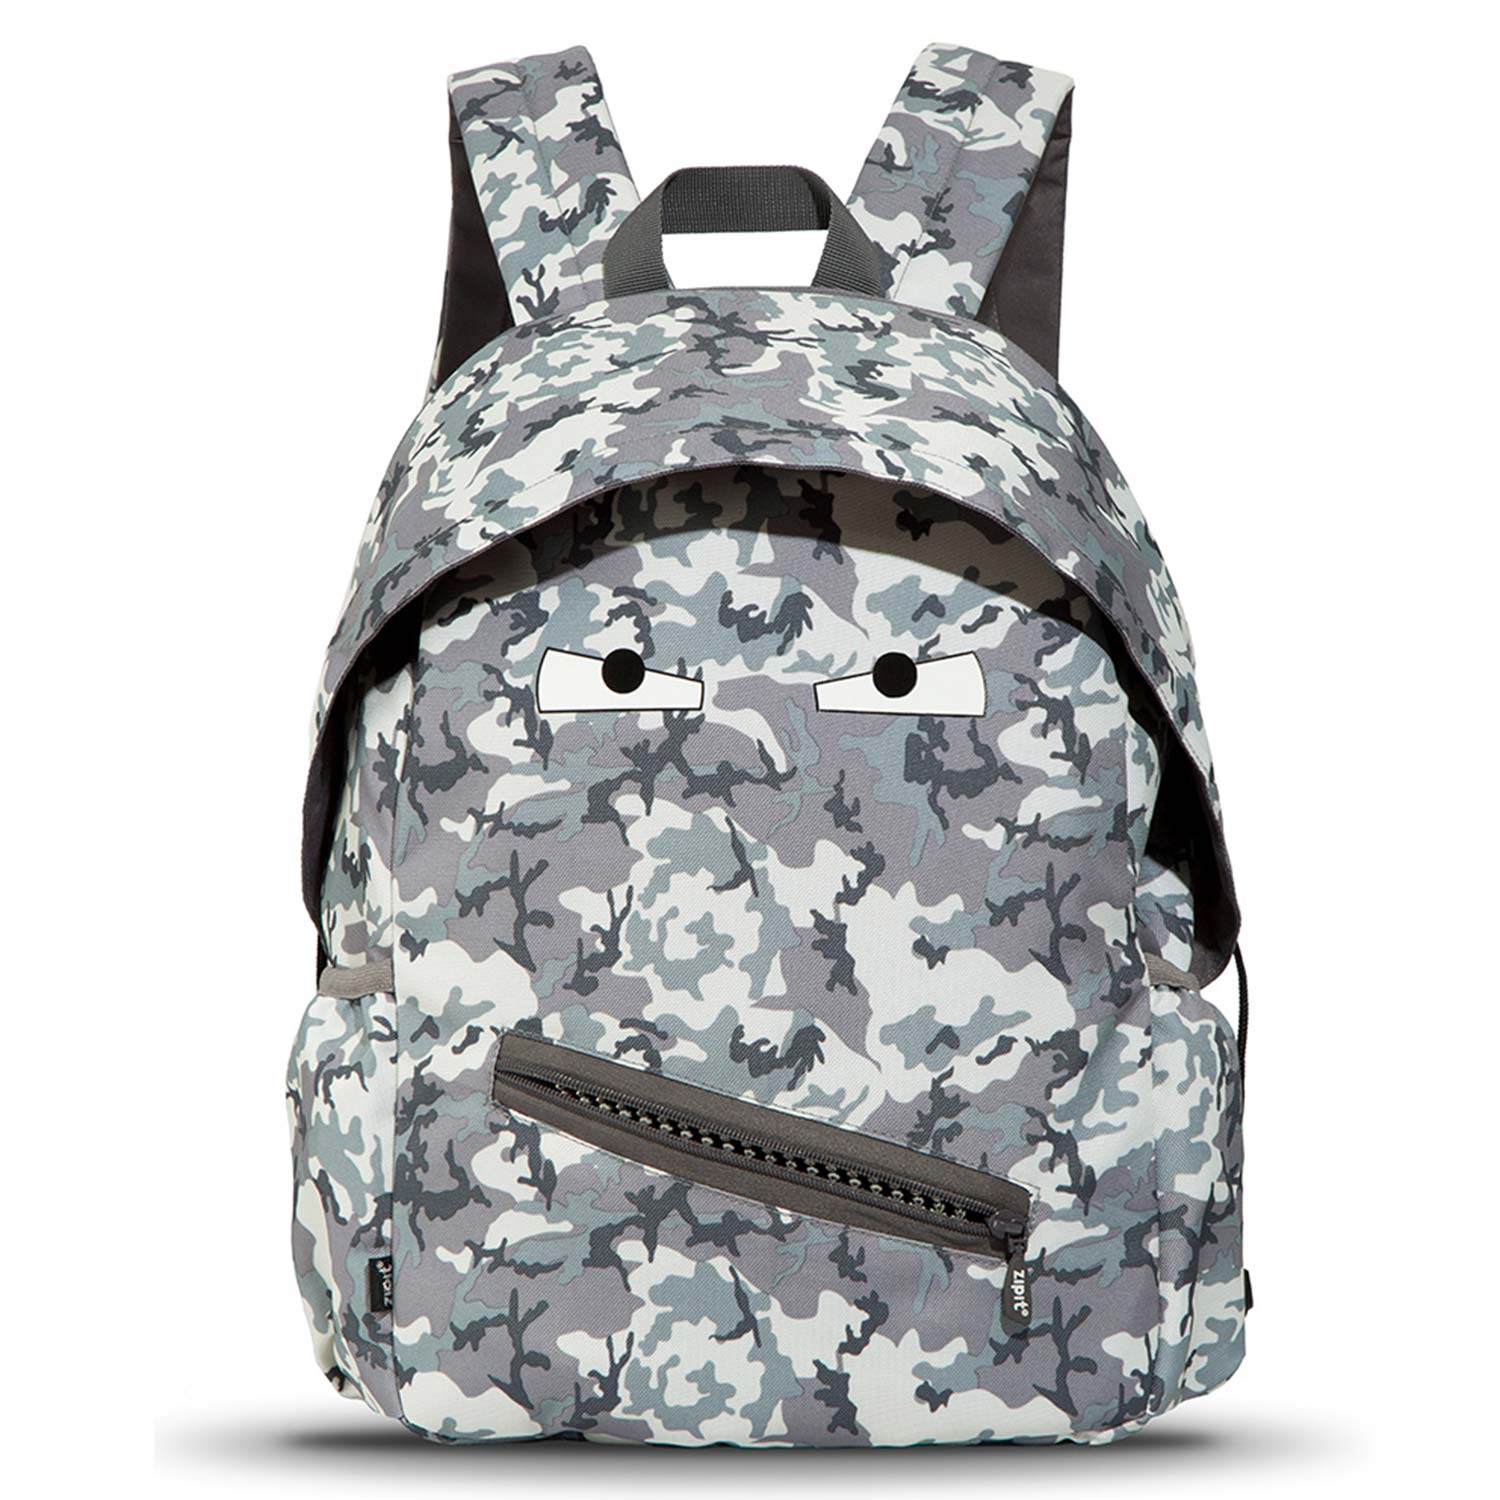 Zipit Grillz Backpack